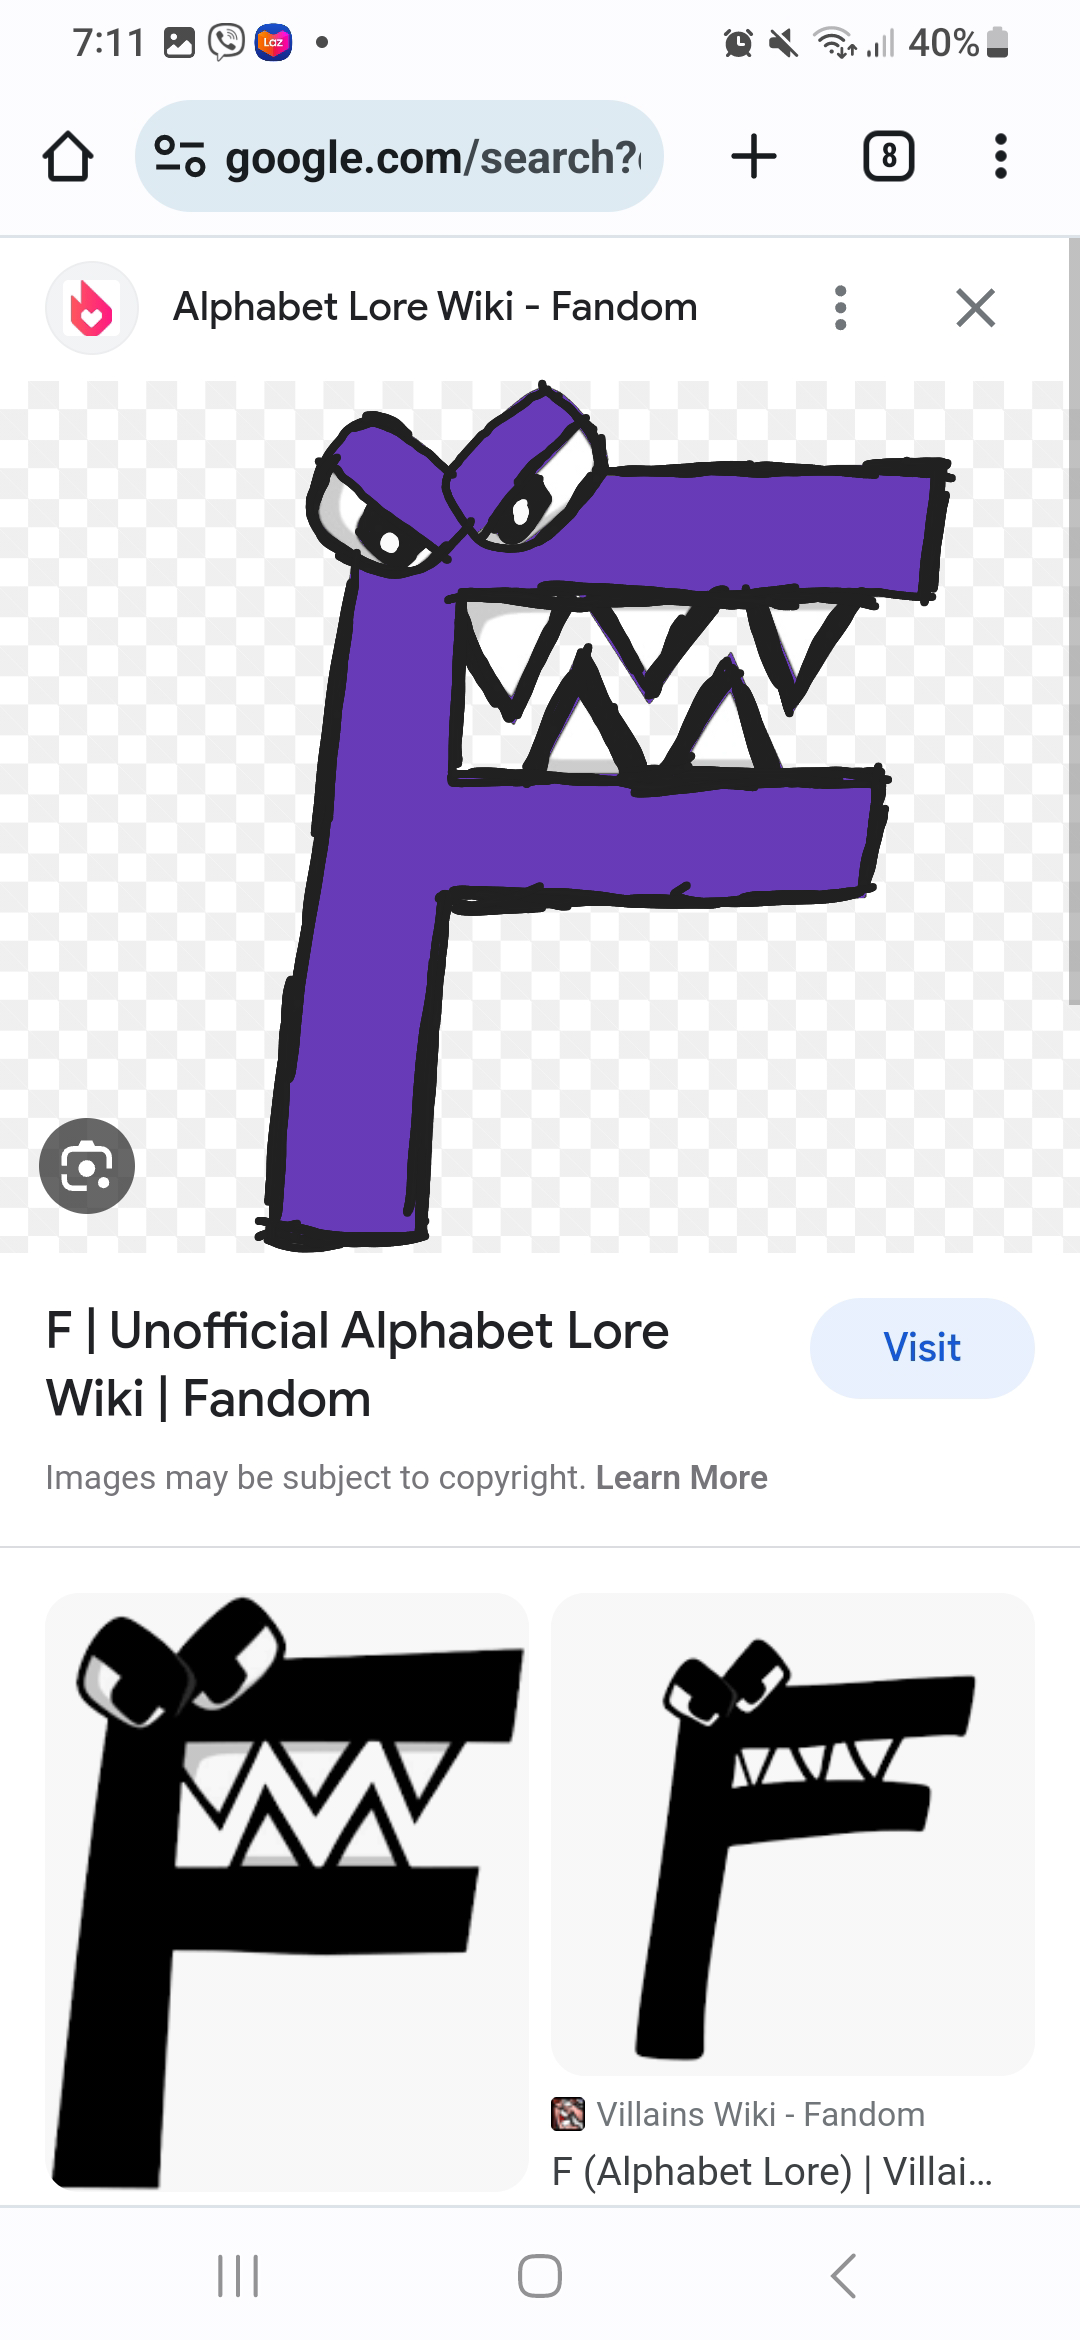 K, Unofficial Alphabet Lore Wiki